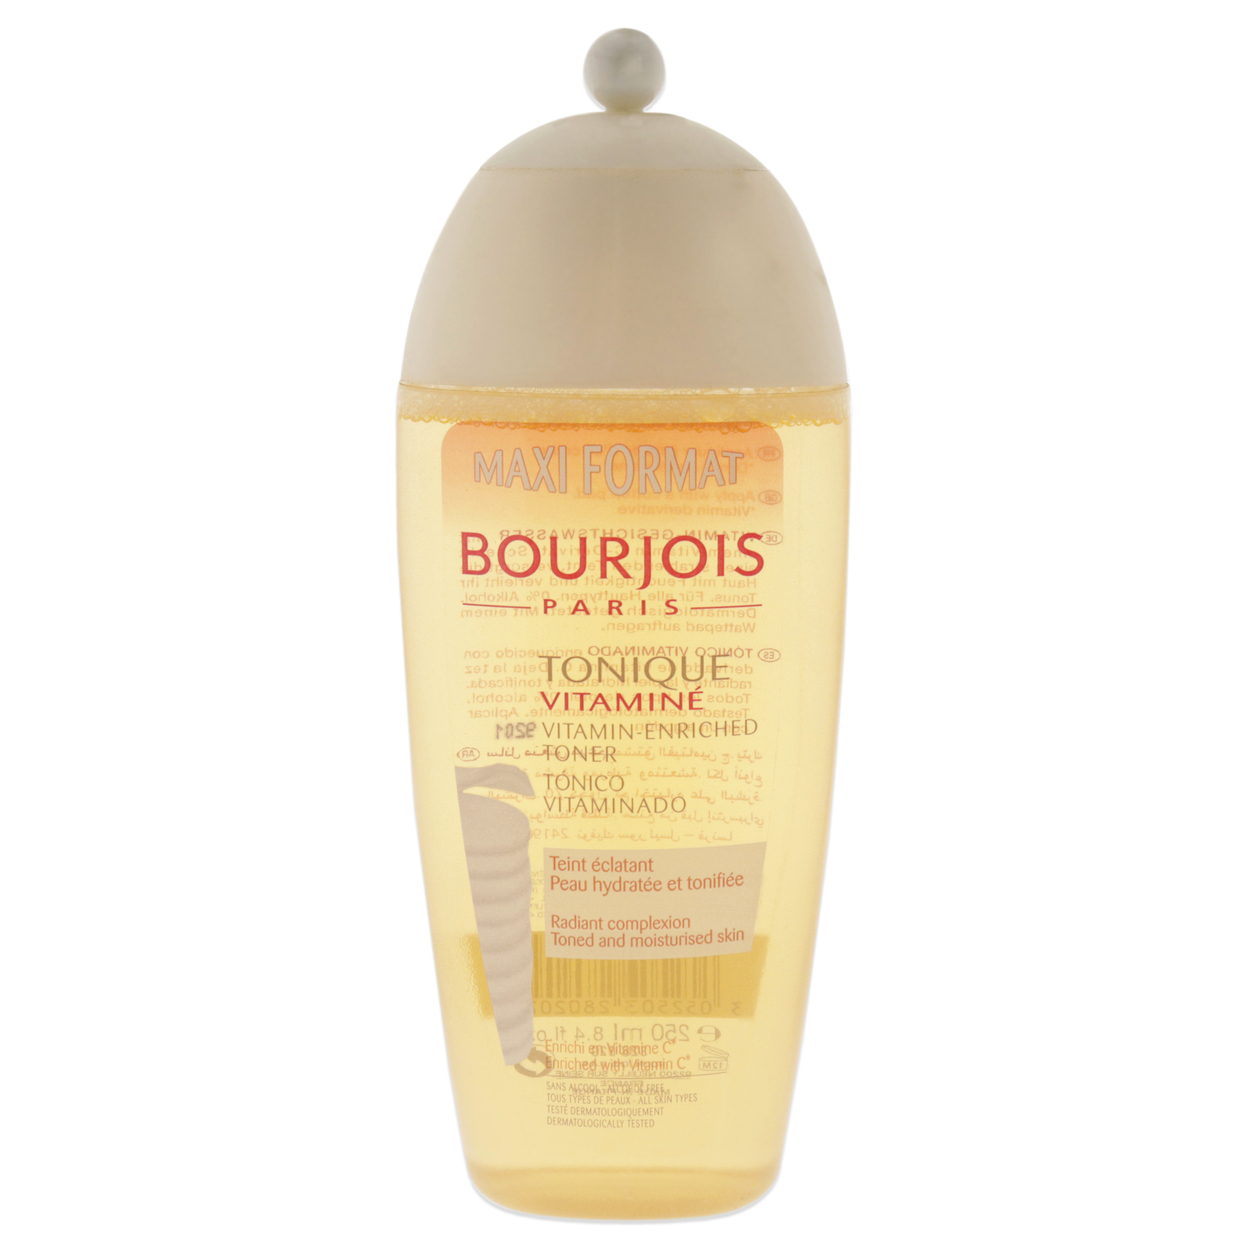 Bourjois Maxi Format Vitamin-Enriched Toner 8.4 Oz